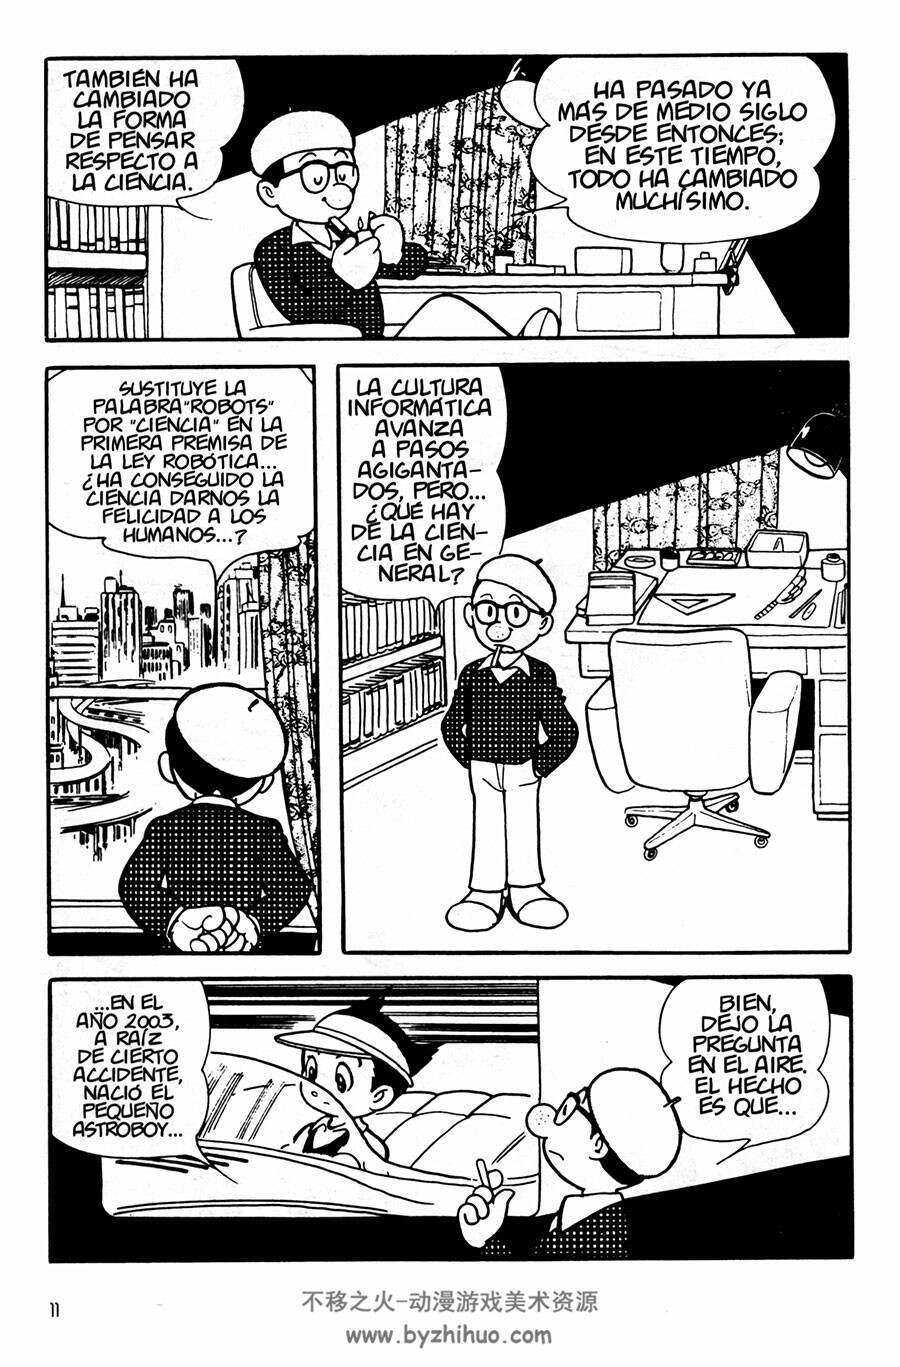 Astroboy 第1-7卷 [共7卷] 漫画下载